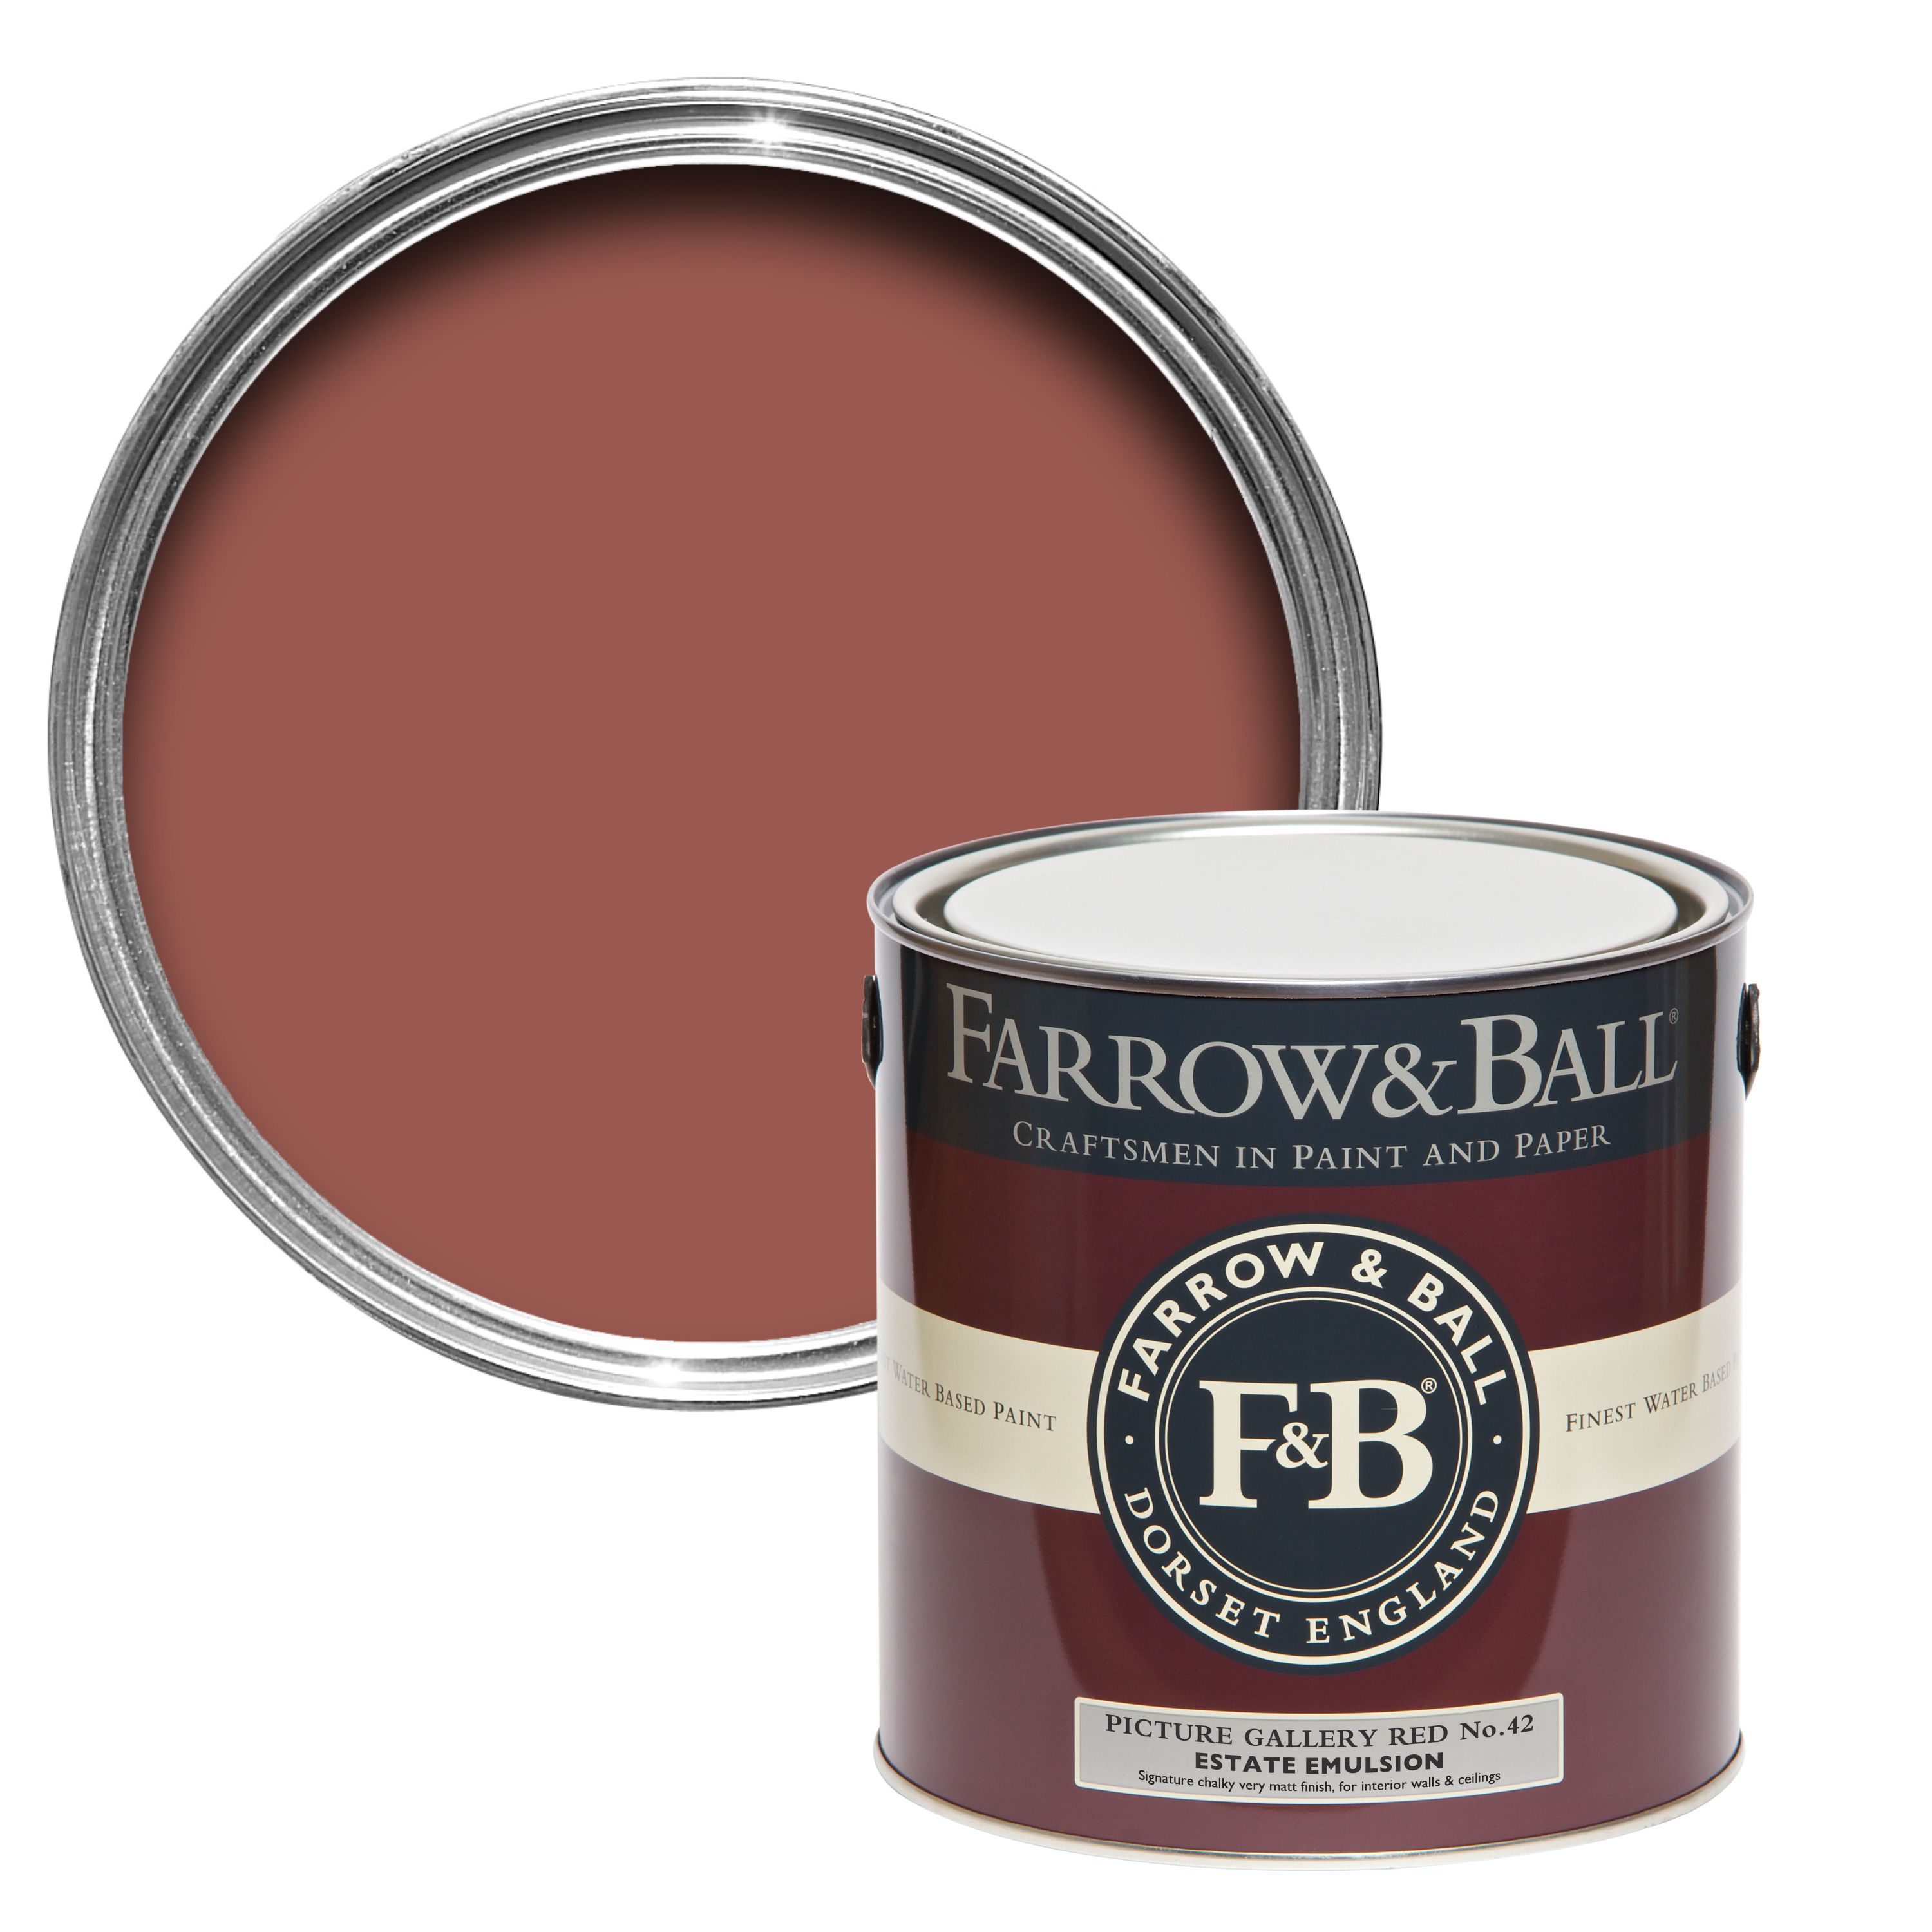 Farrow & Ball Estate Picture gallery red Matt Emulsion paint, 2.5L